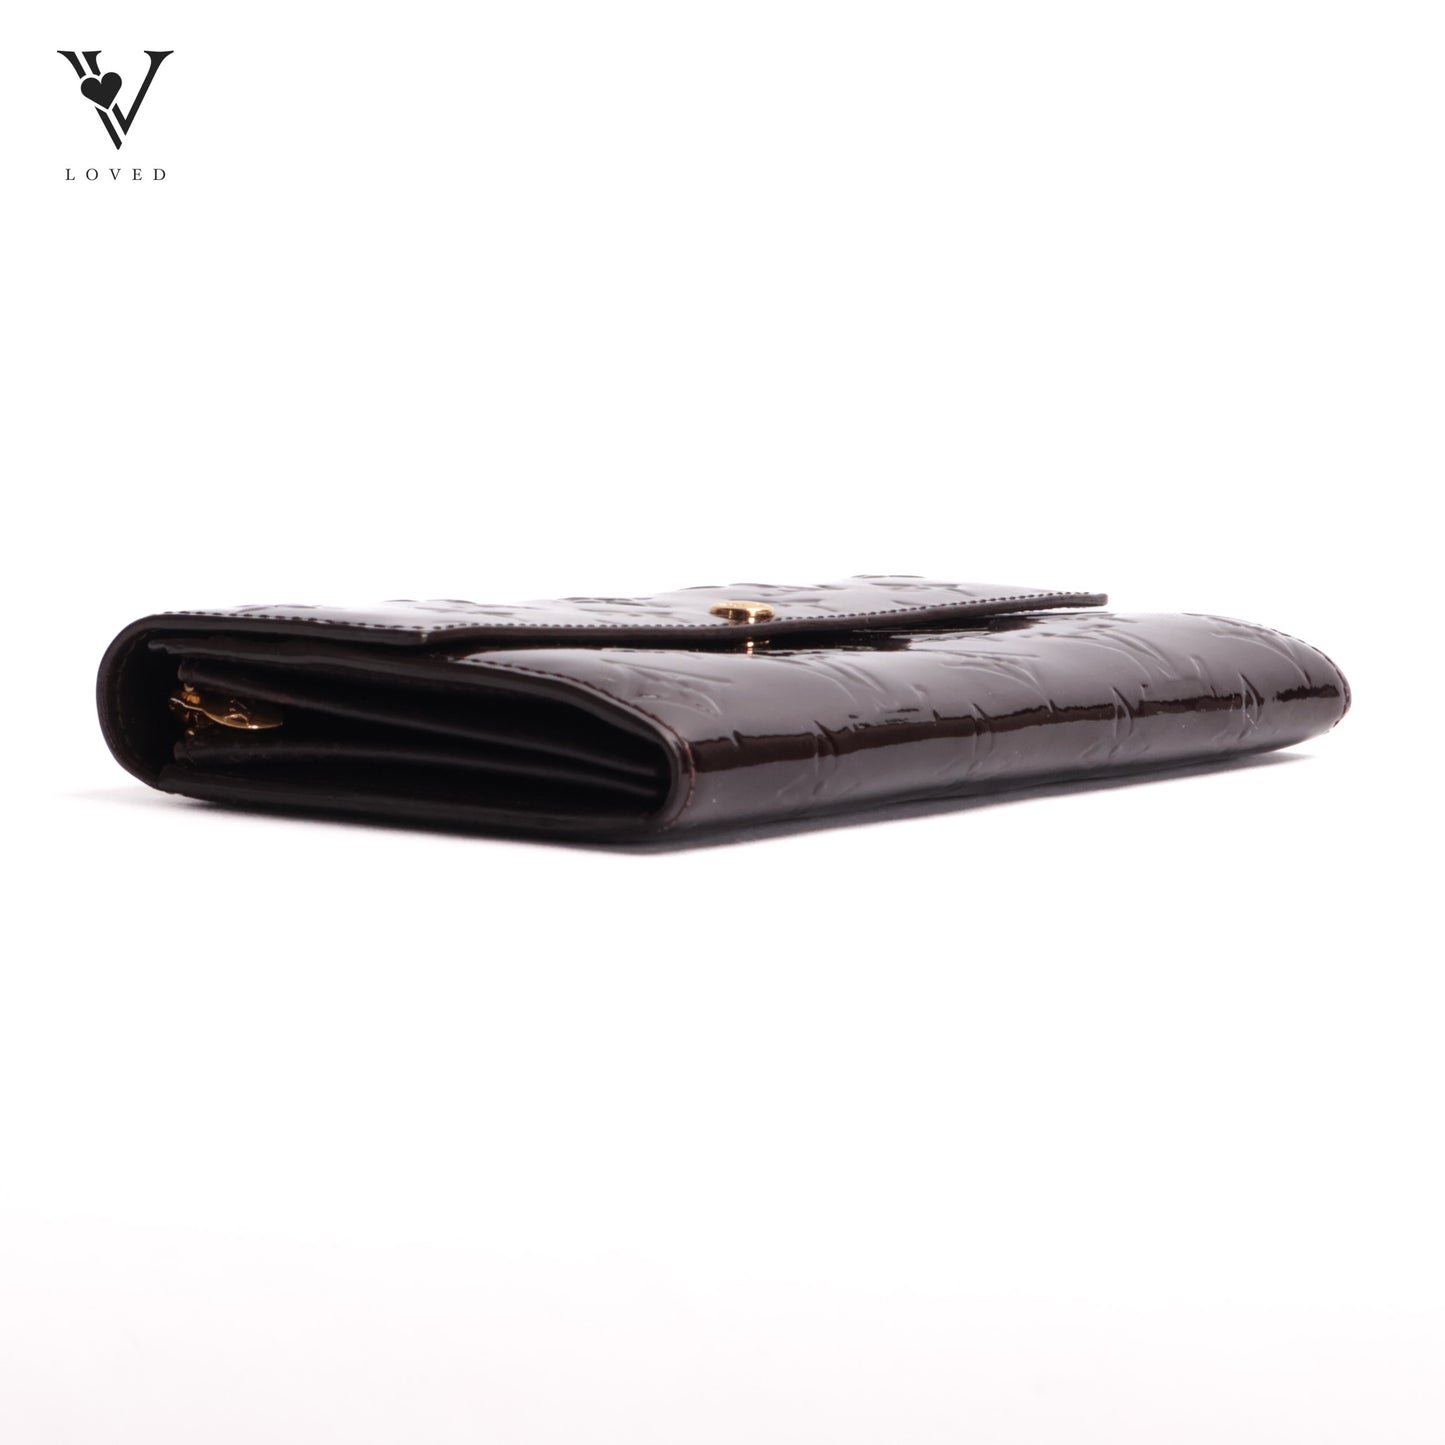 Monogram Vernis Leather Wallet